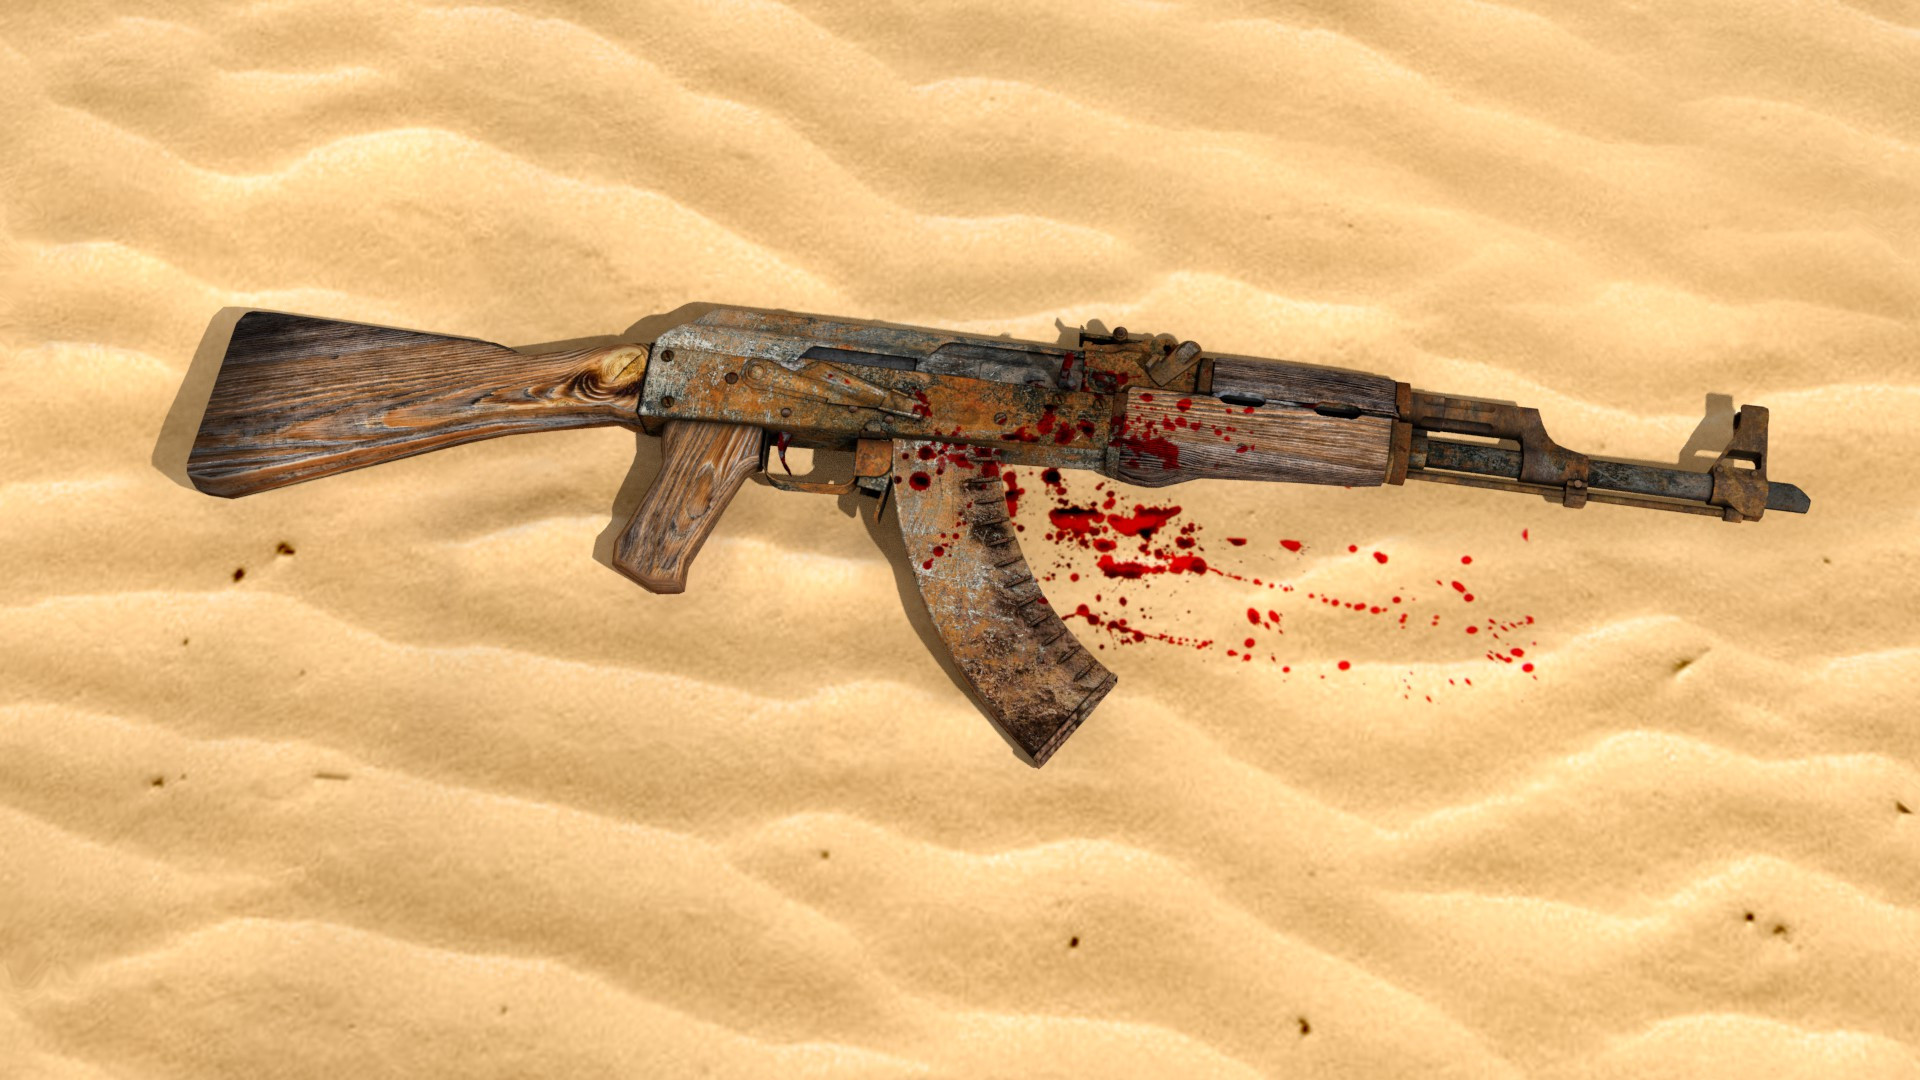 AK 47 Survivor Skin v1.0 for CS:GO